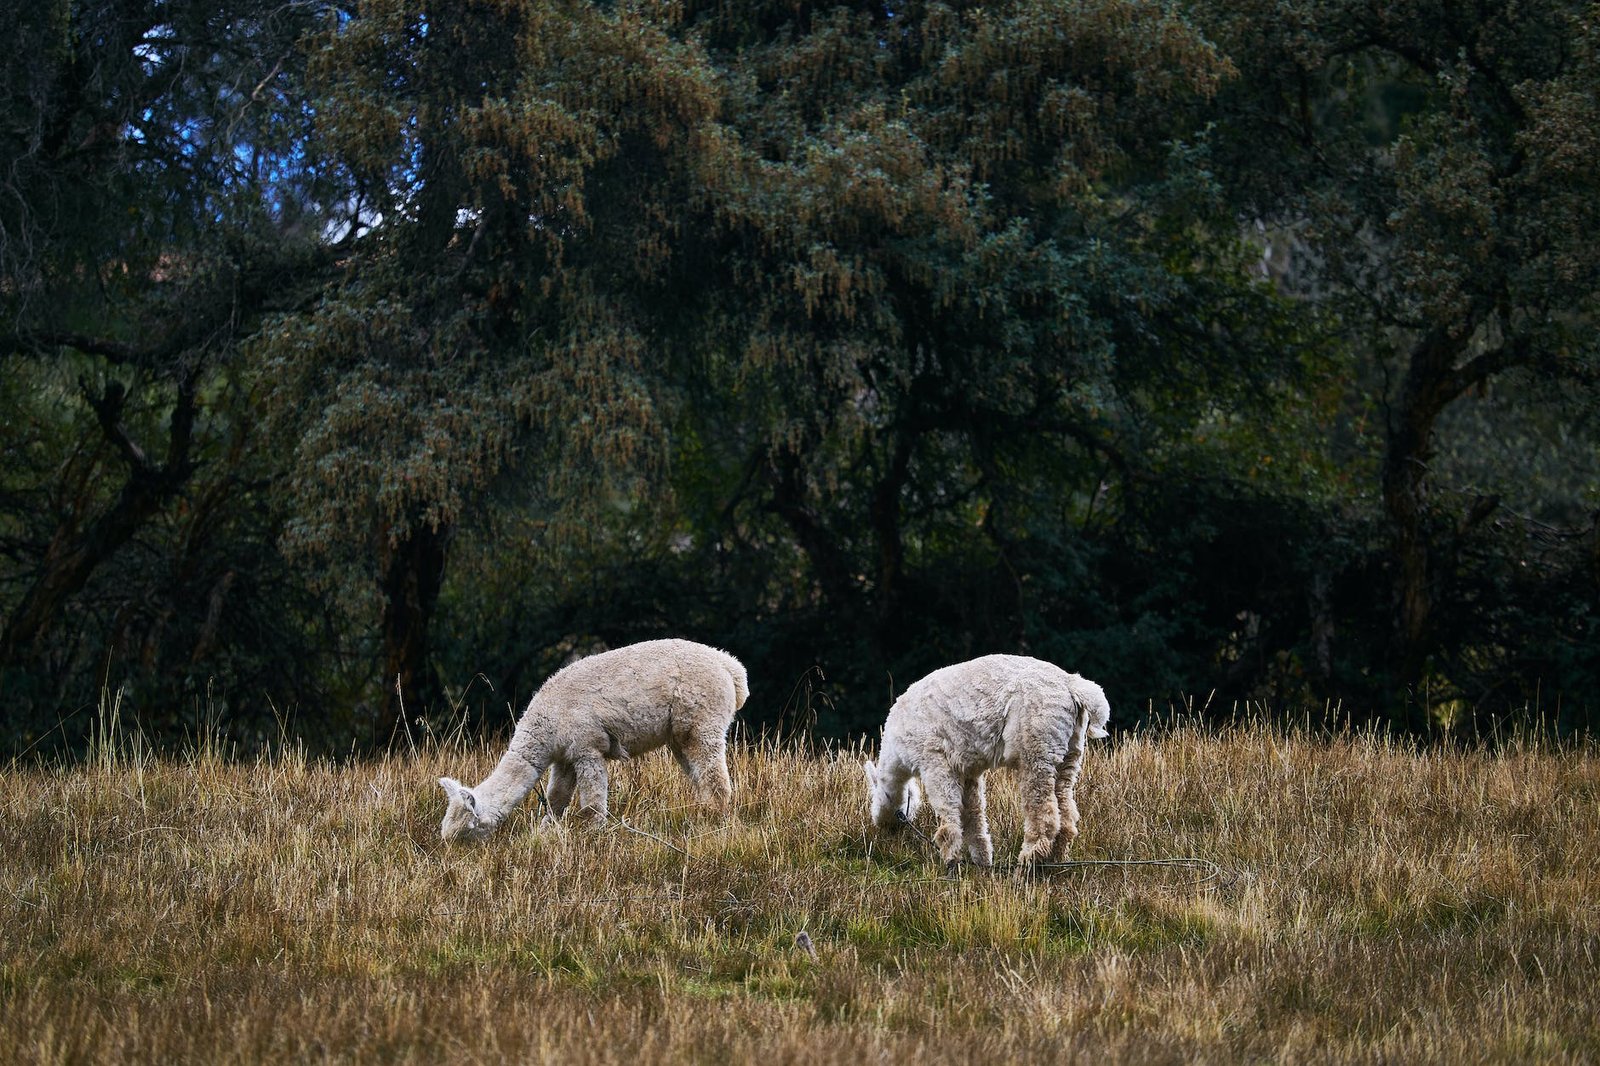 alpacas eating on grass